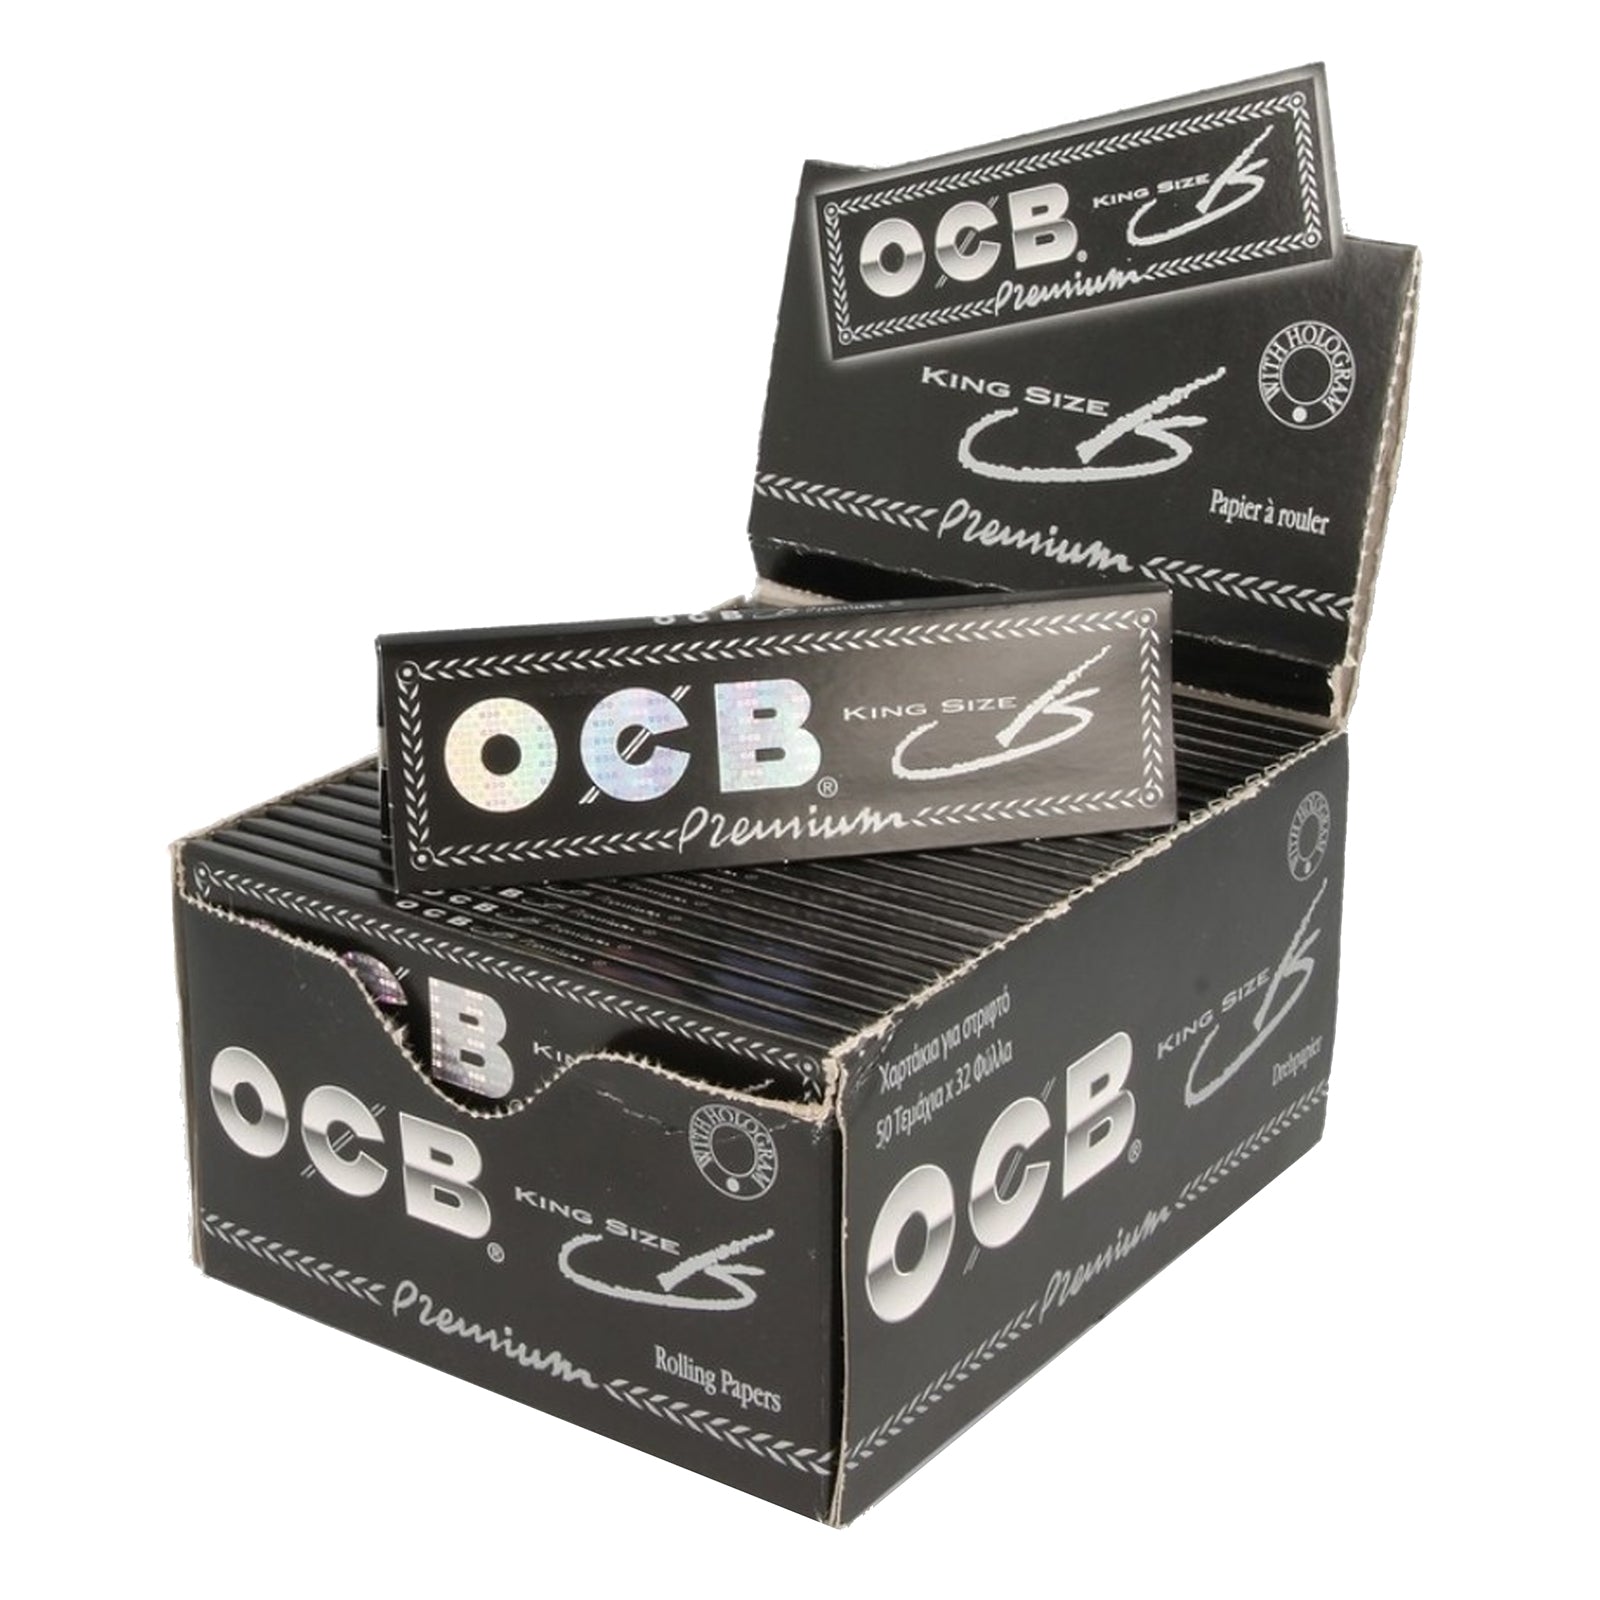 Feuille OCB Premium x25 – Smokebook